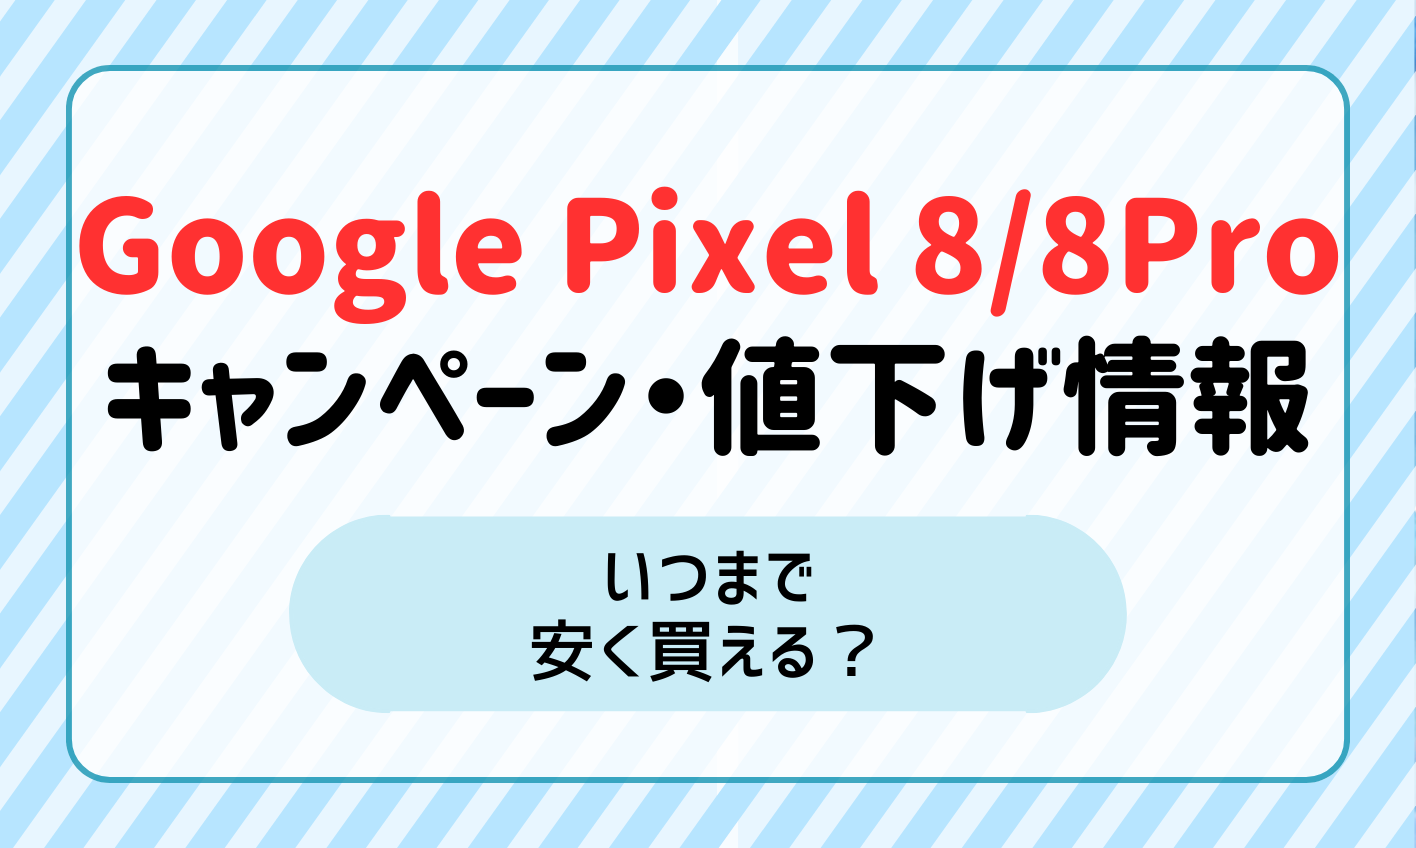 Pixel8/8Proのキャンペーン情報